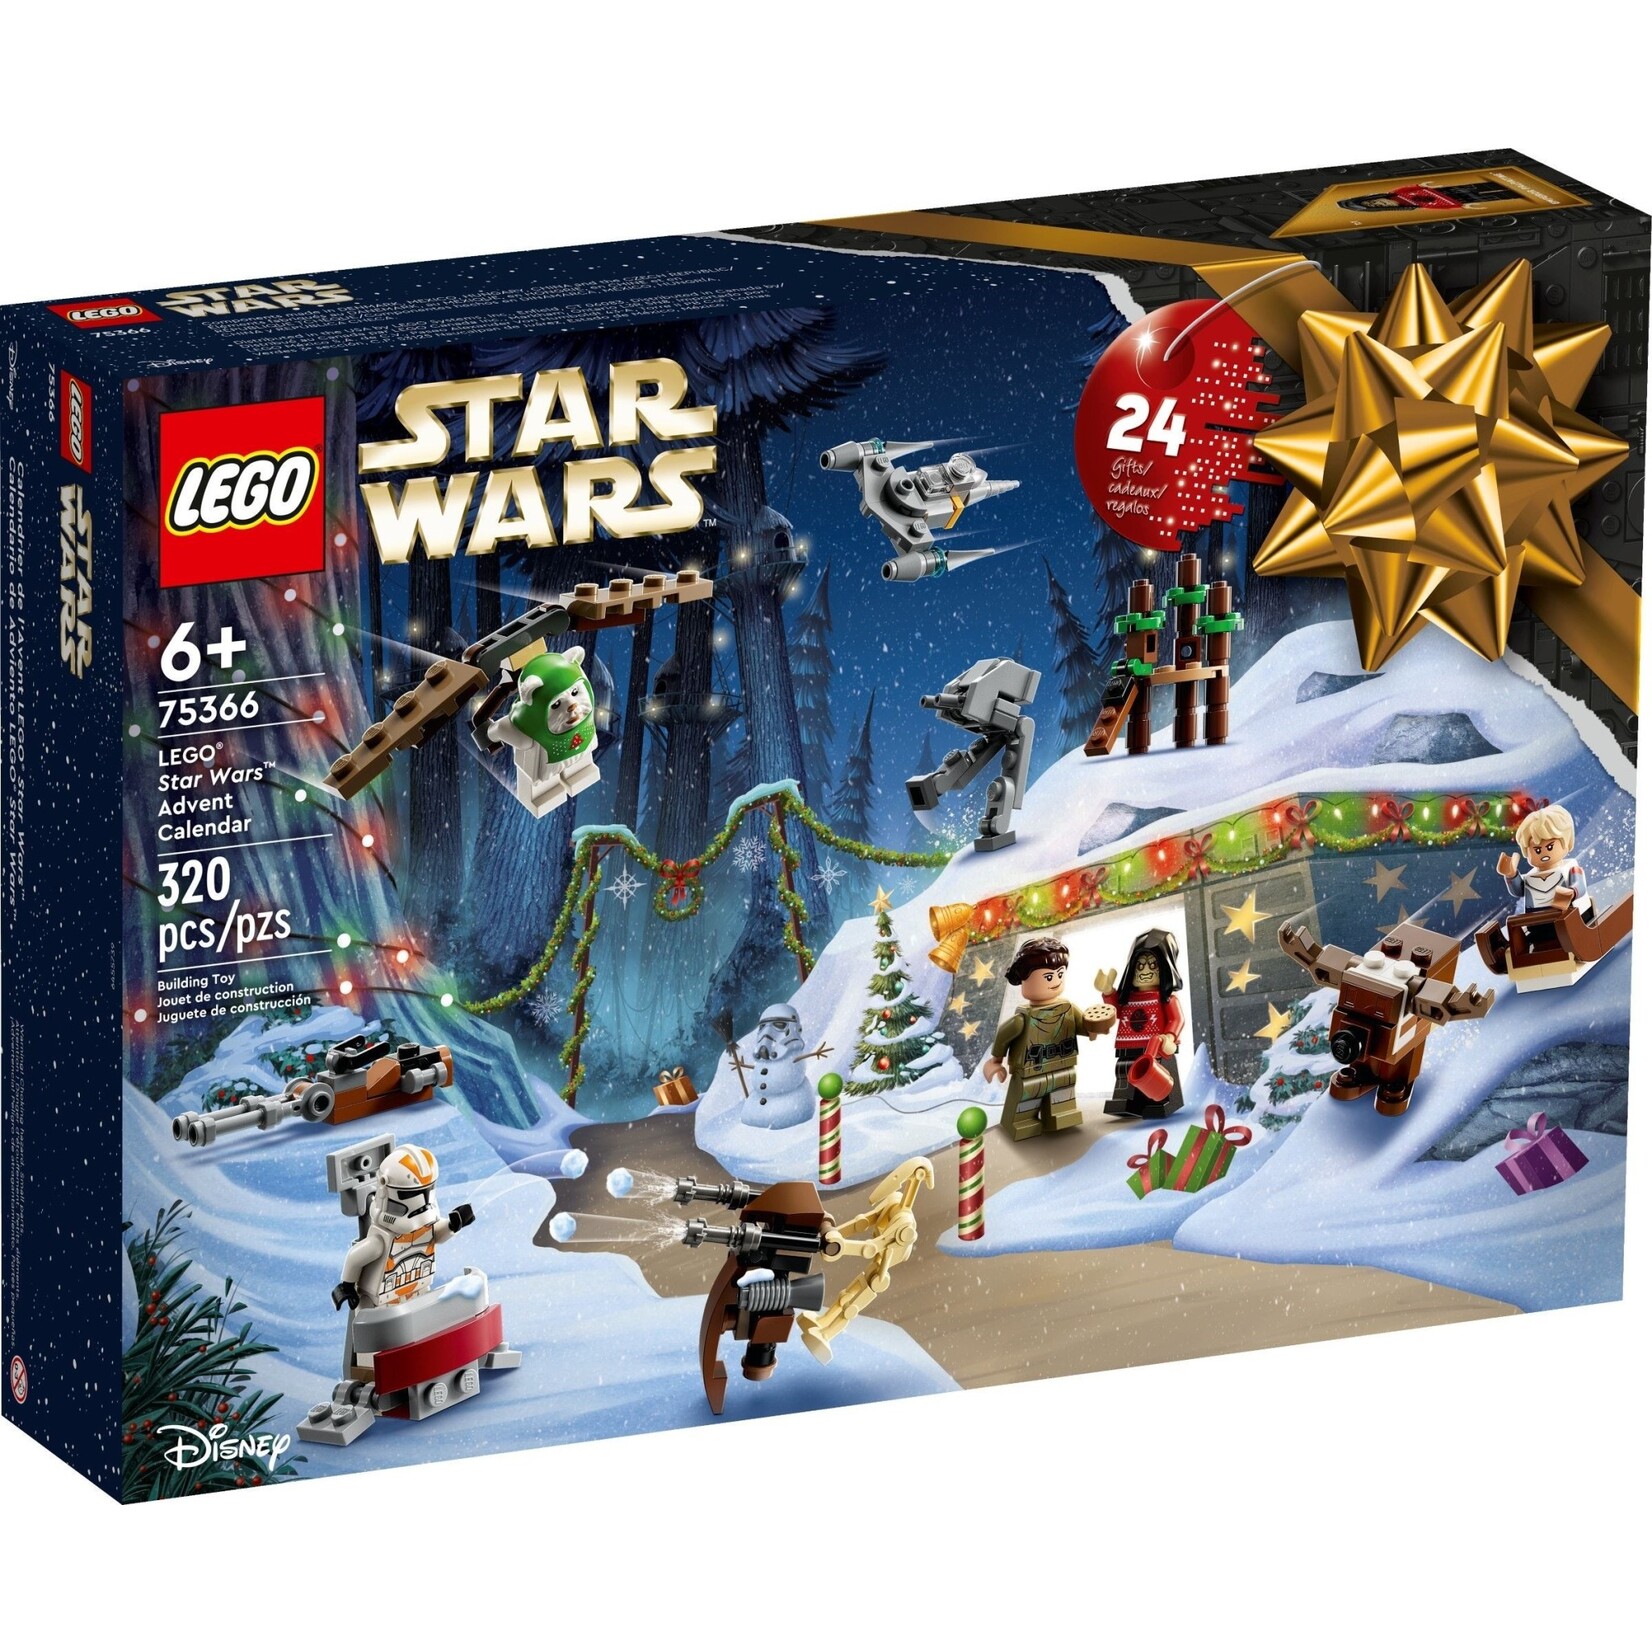 LEGO Star Wars™ adventkalender - 75366